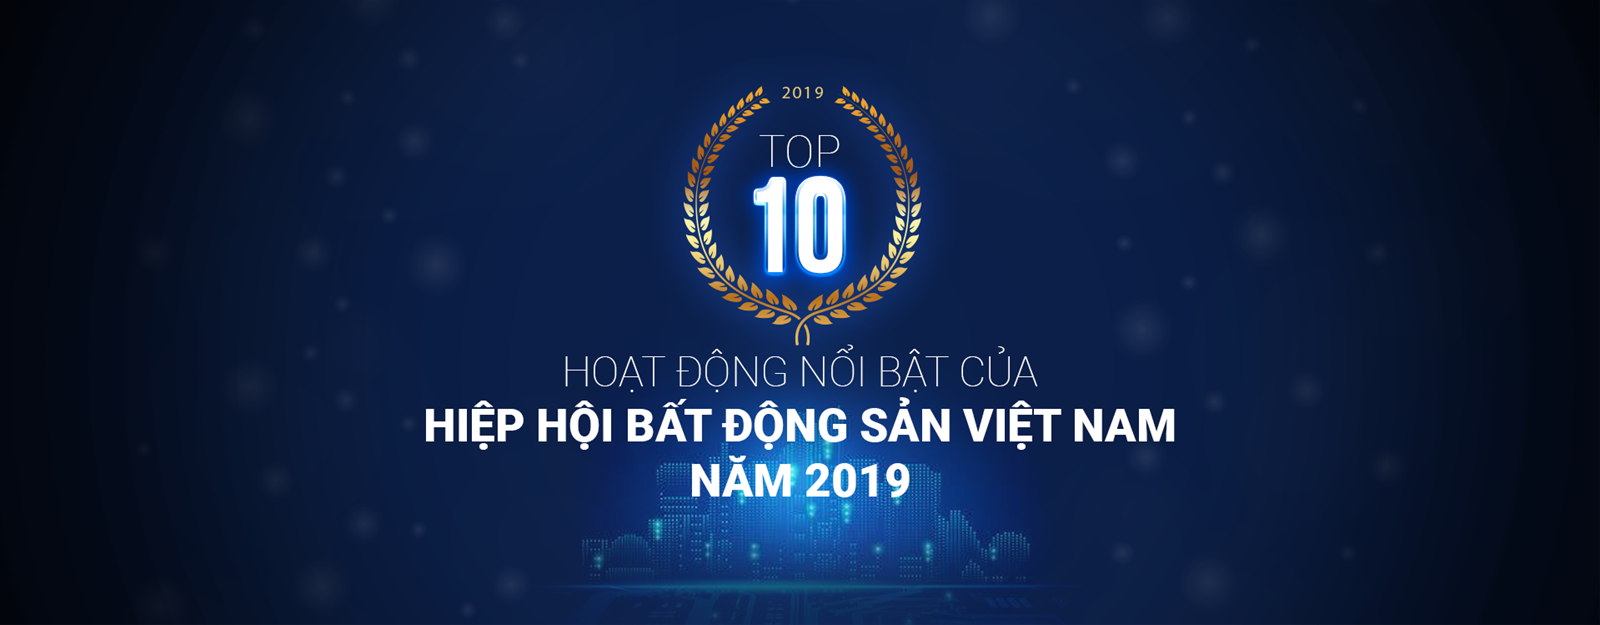 Top 10 activities of the Vietnam National Real Estate Association in 2019